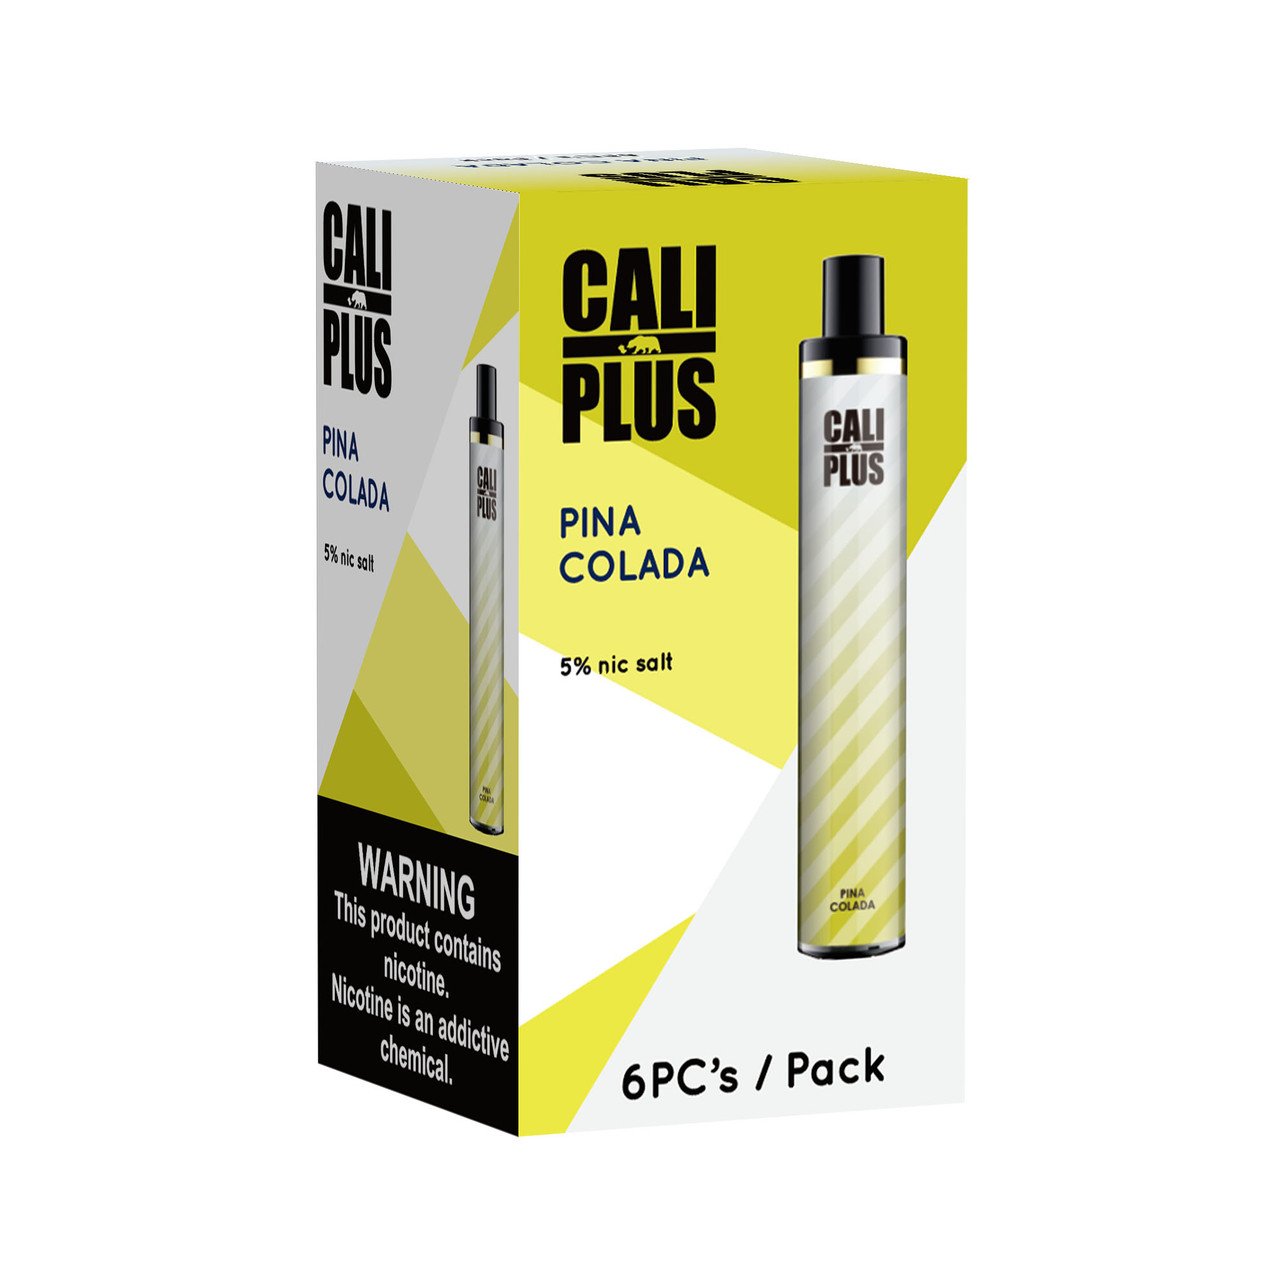 Cali Plus Disposable Ecigs 5% Nicotine, City of Vapors